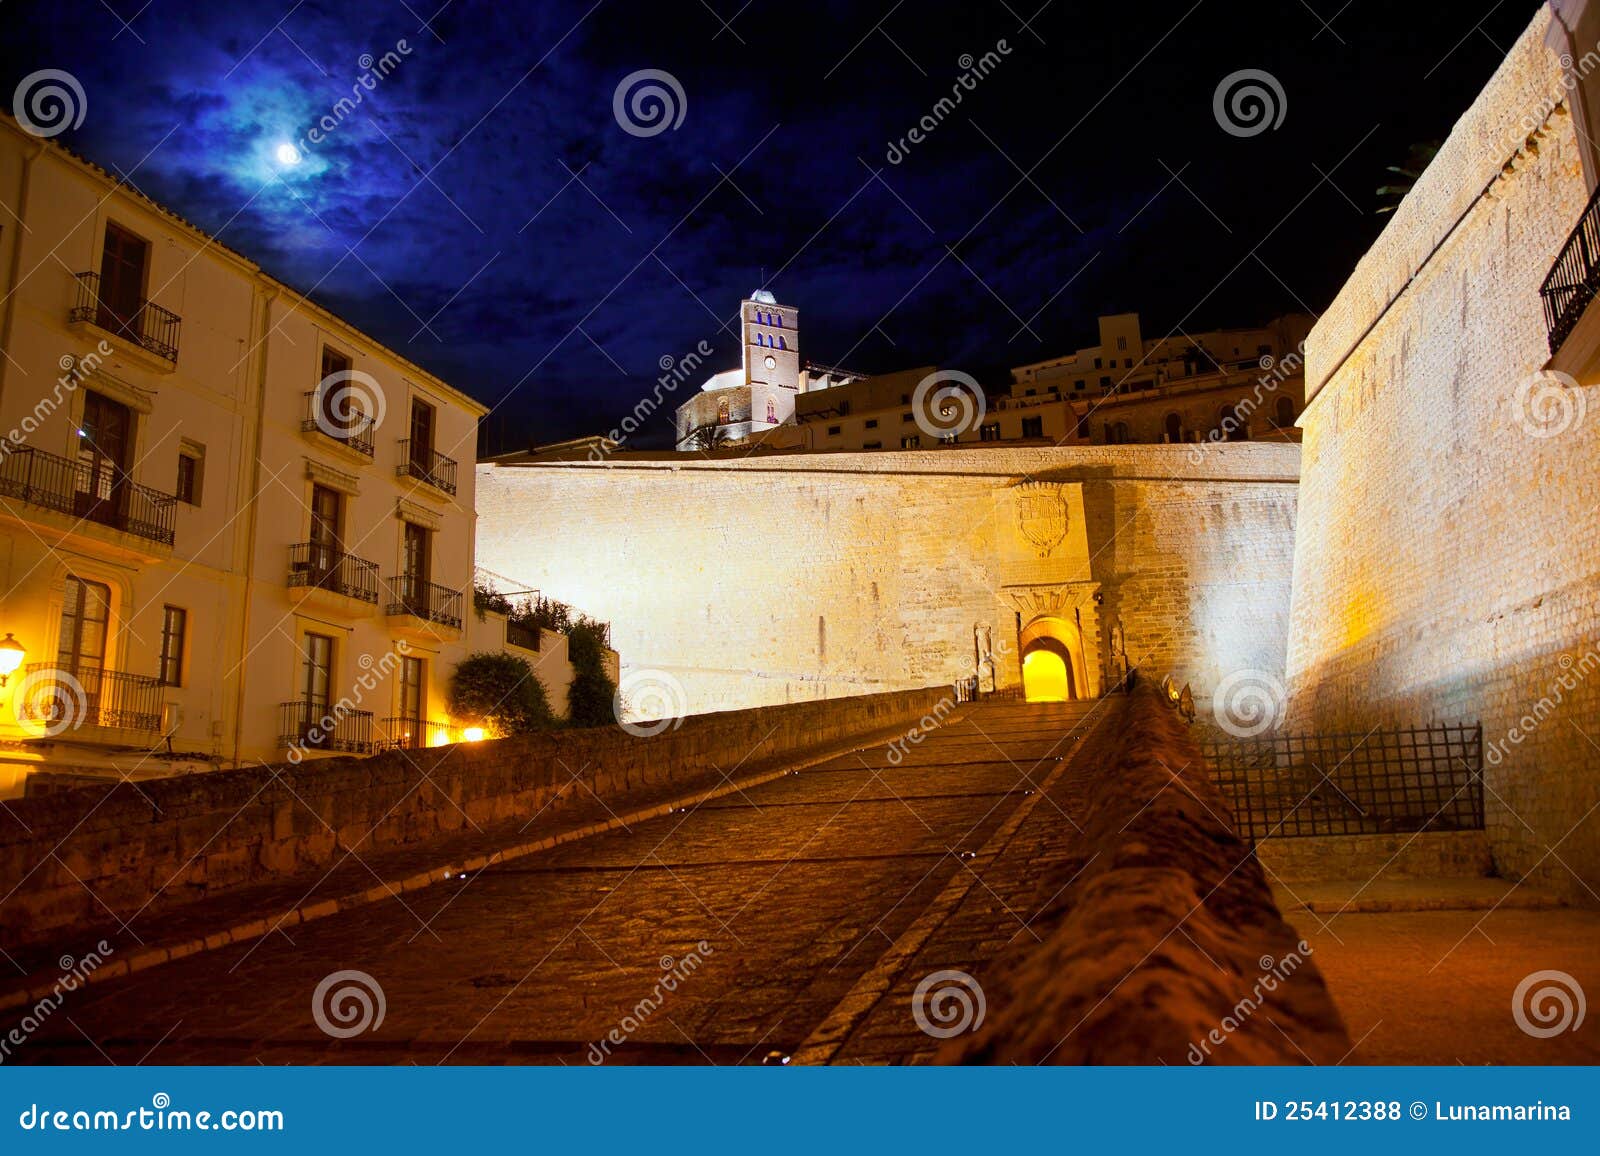 eivissa ibiza town with night moon castle entrance